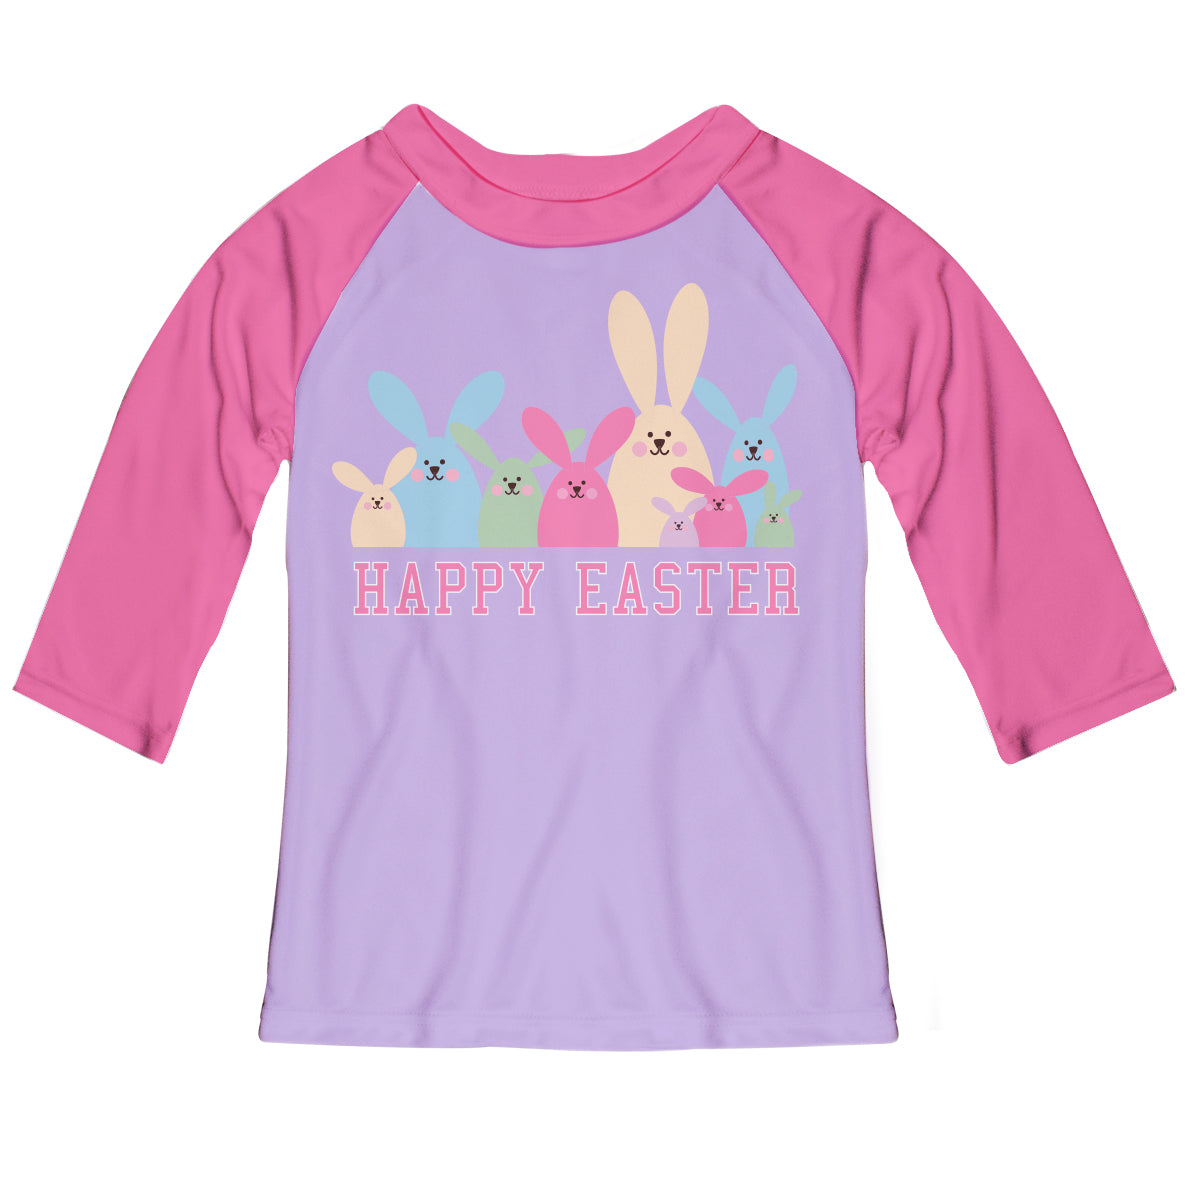 Happy Easter Purple and Pink Raglan Tee Shirt 3/4 Sleeve